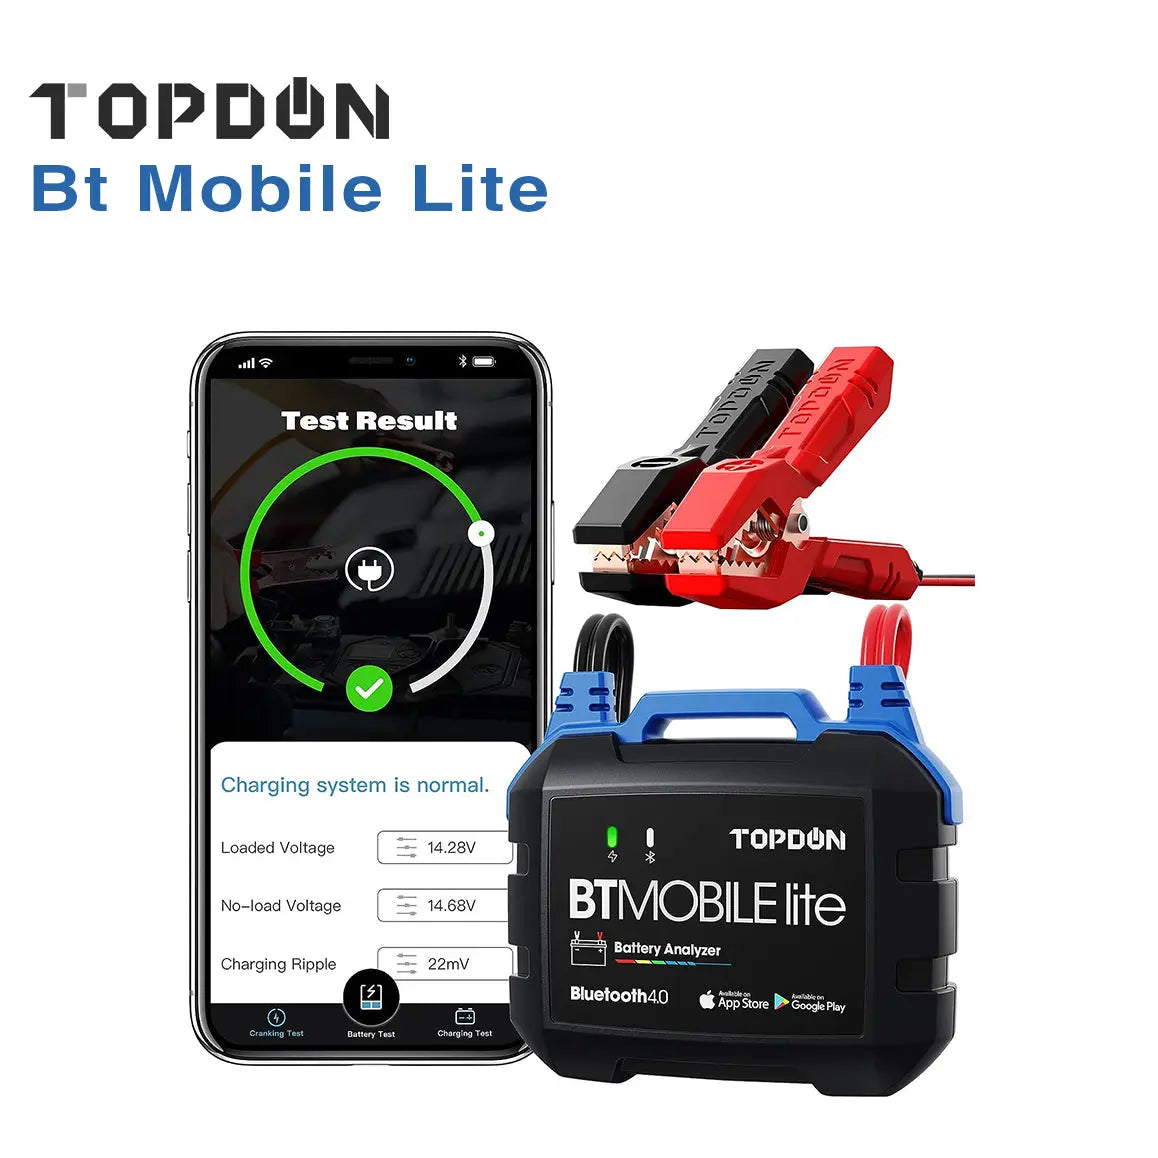 TOPDON BTMobile pros 12V Auto Batterietester